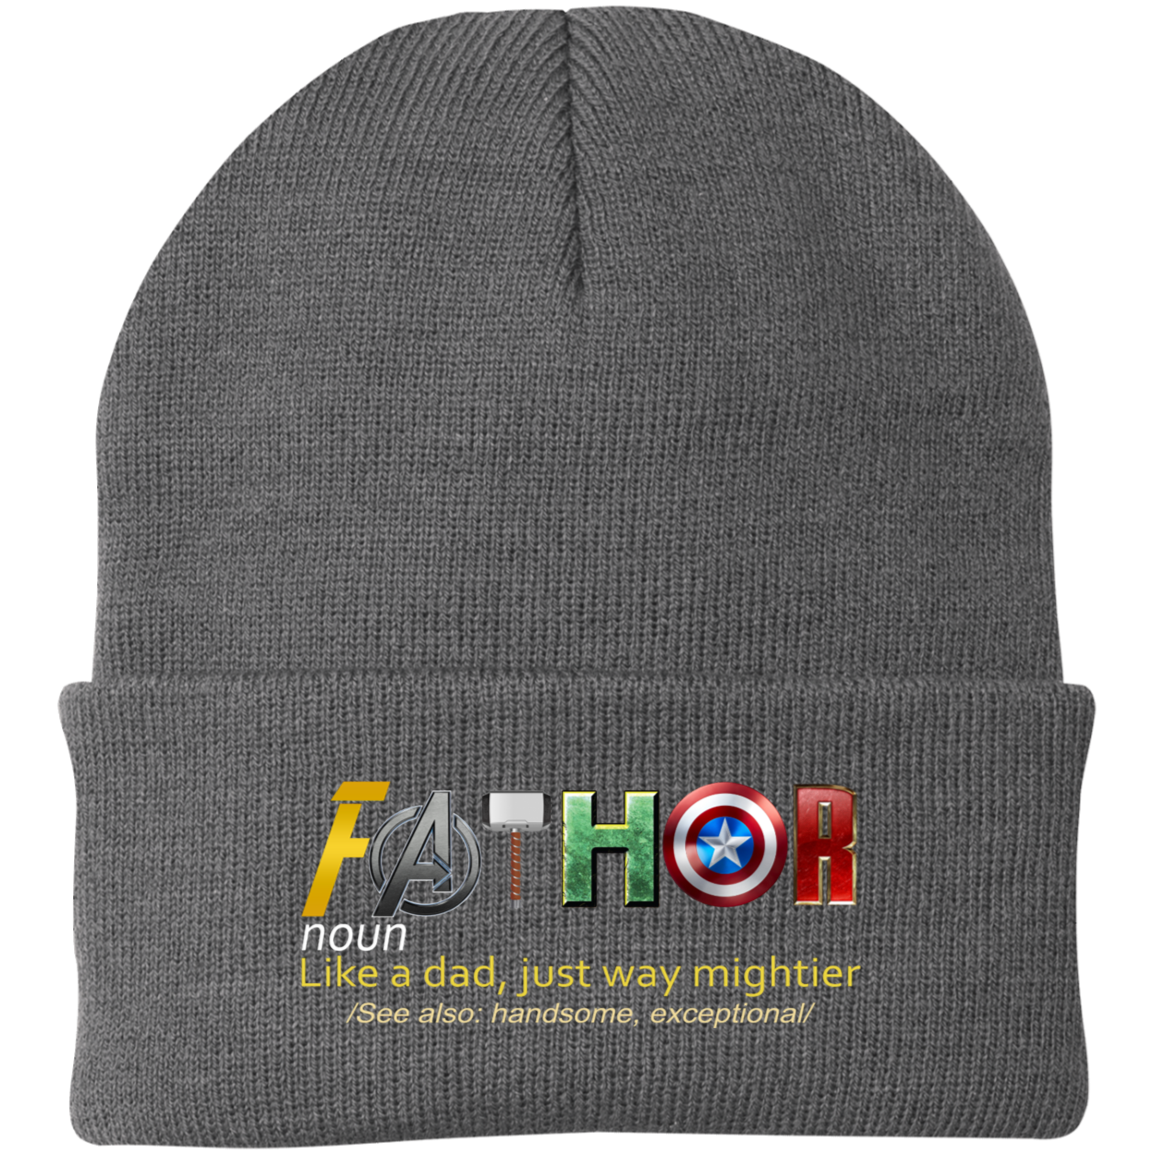 FATHOR KNIT CAP